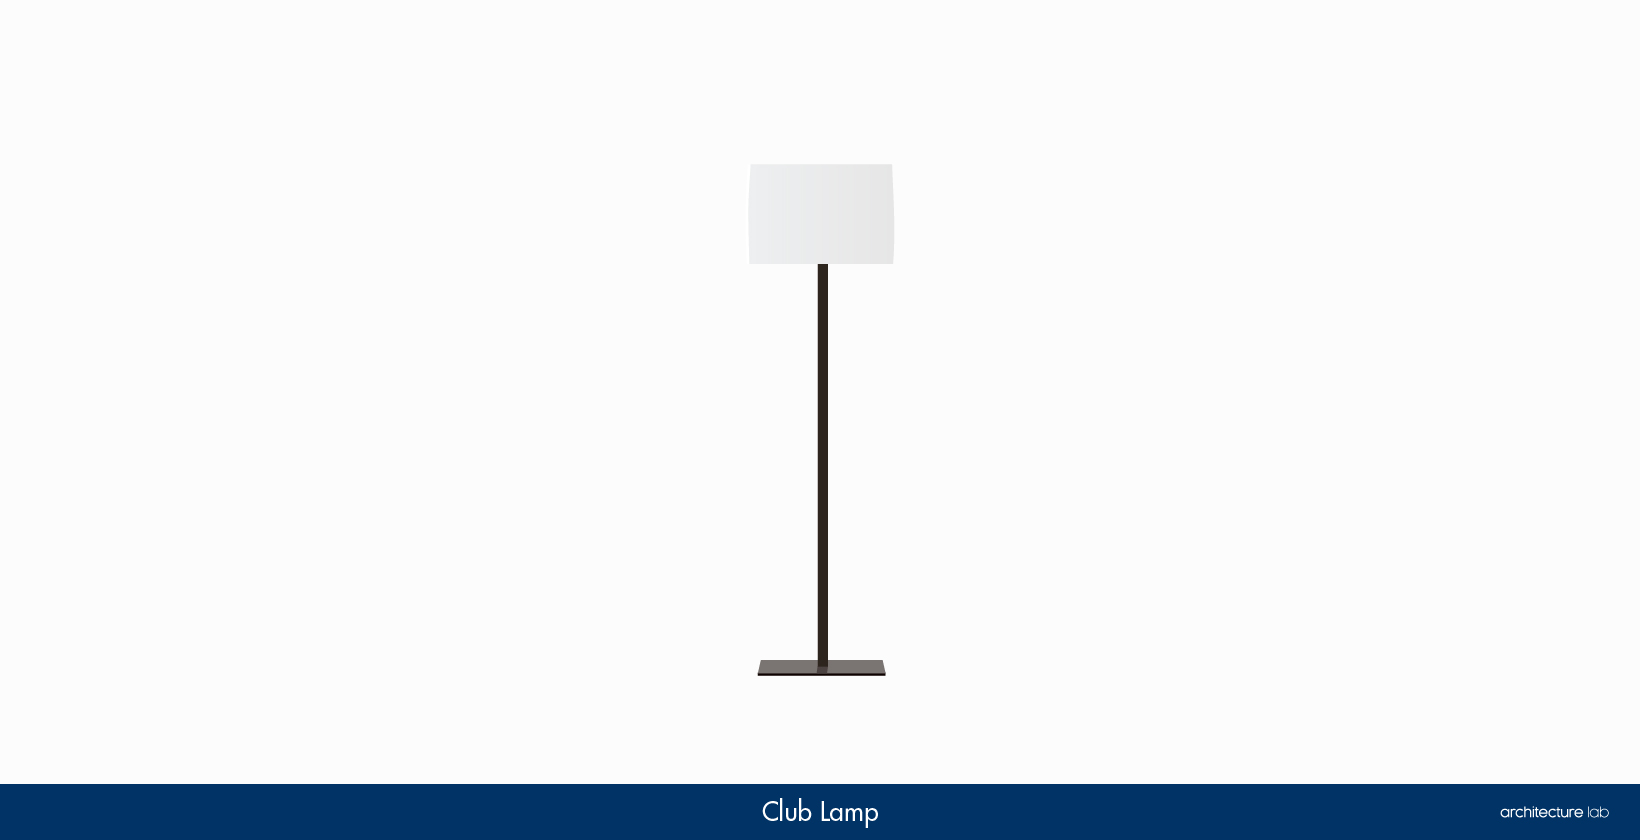 2. Club lamp